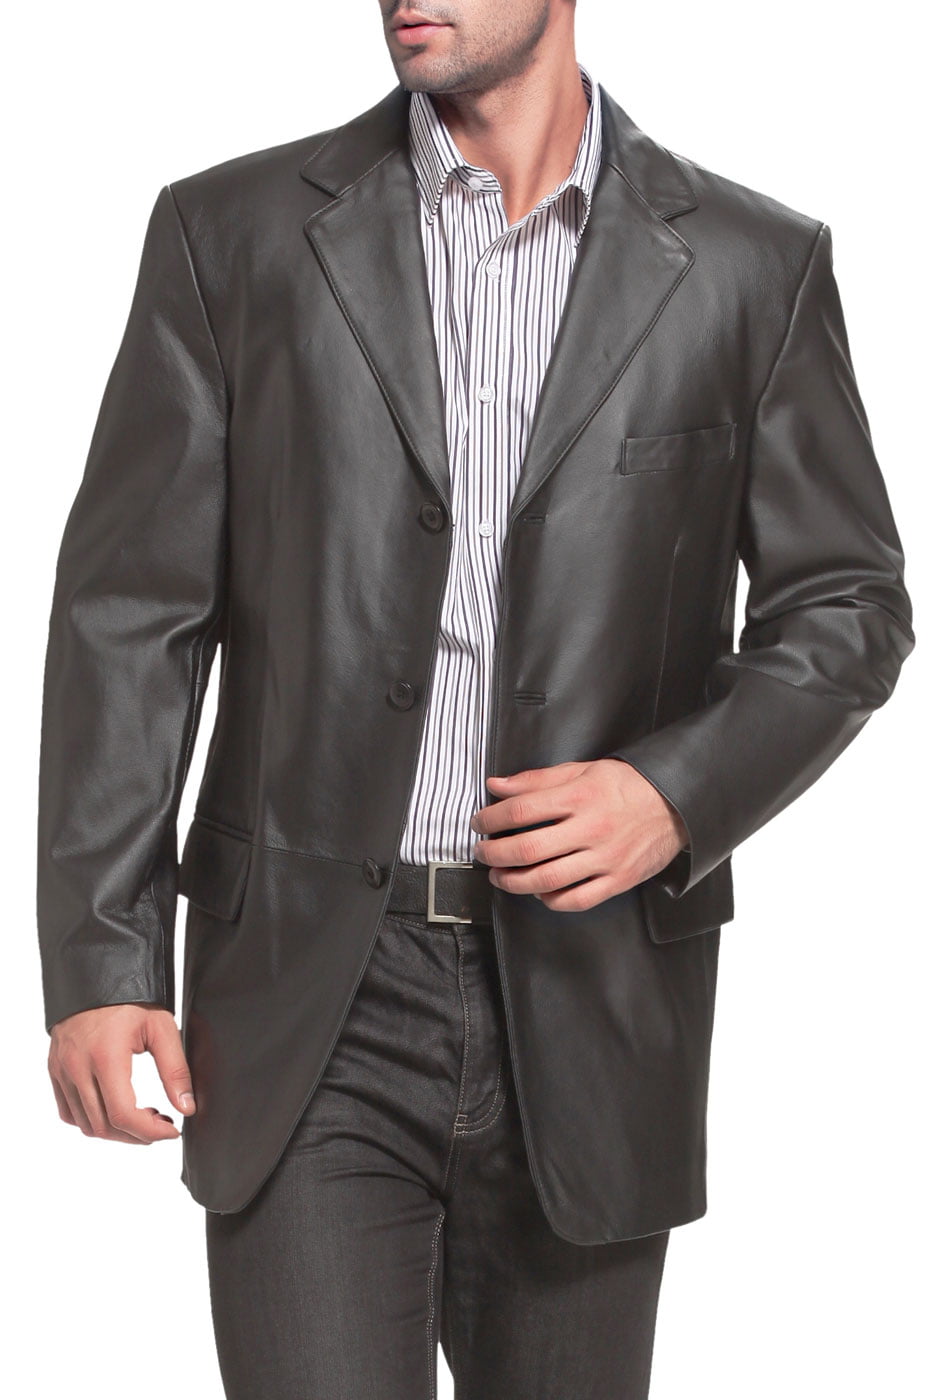 BGSD Men's Robert 3-Button Leather Blazer Suede Sport Coat Jacket Regular, Big & Tall and Short 